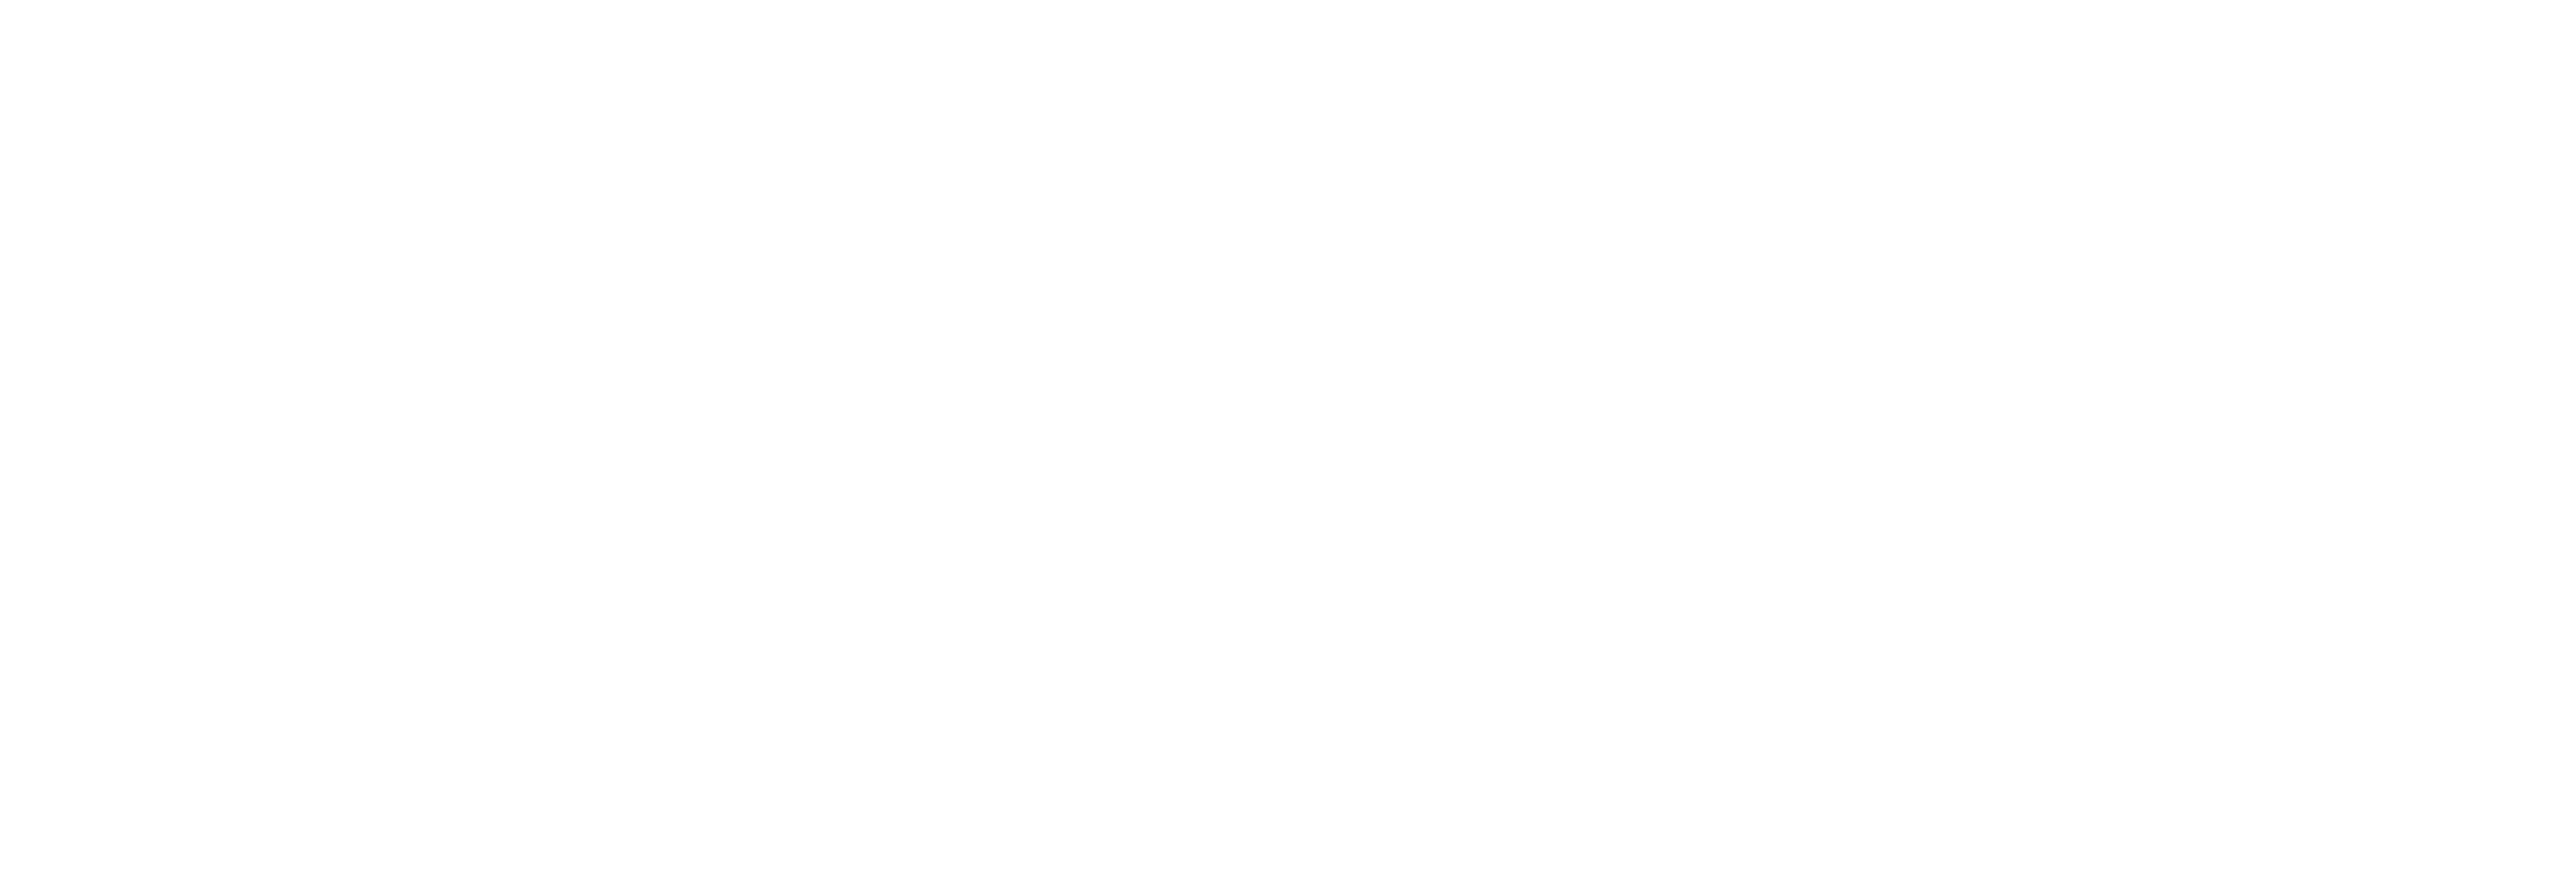 Elna_Medical_Vert_WHITE_Transparent_RGB_EN